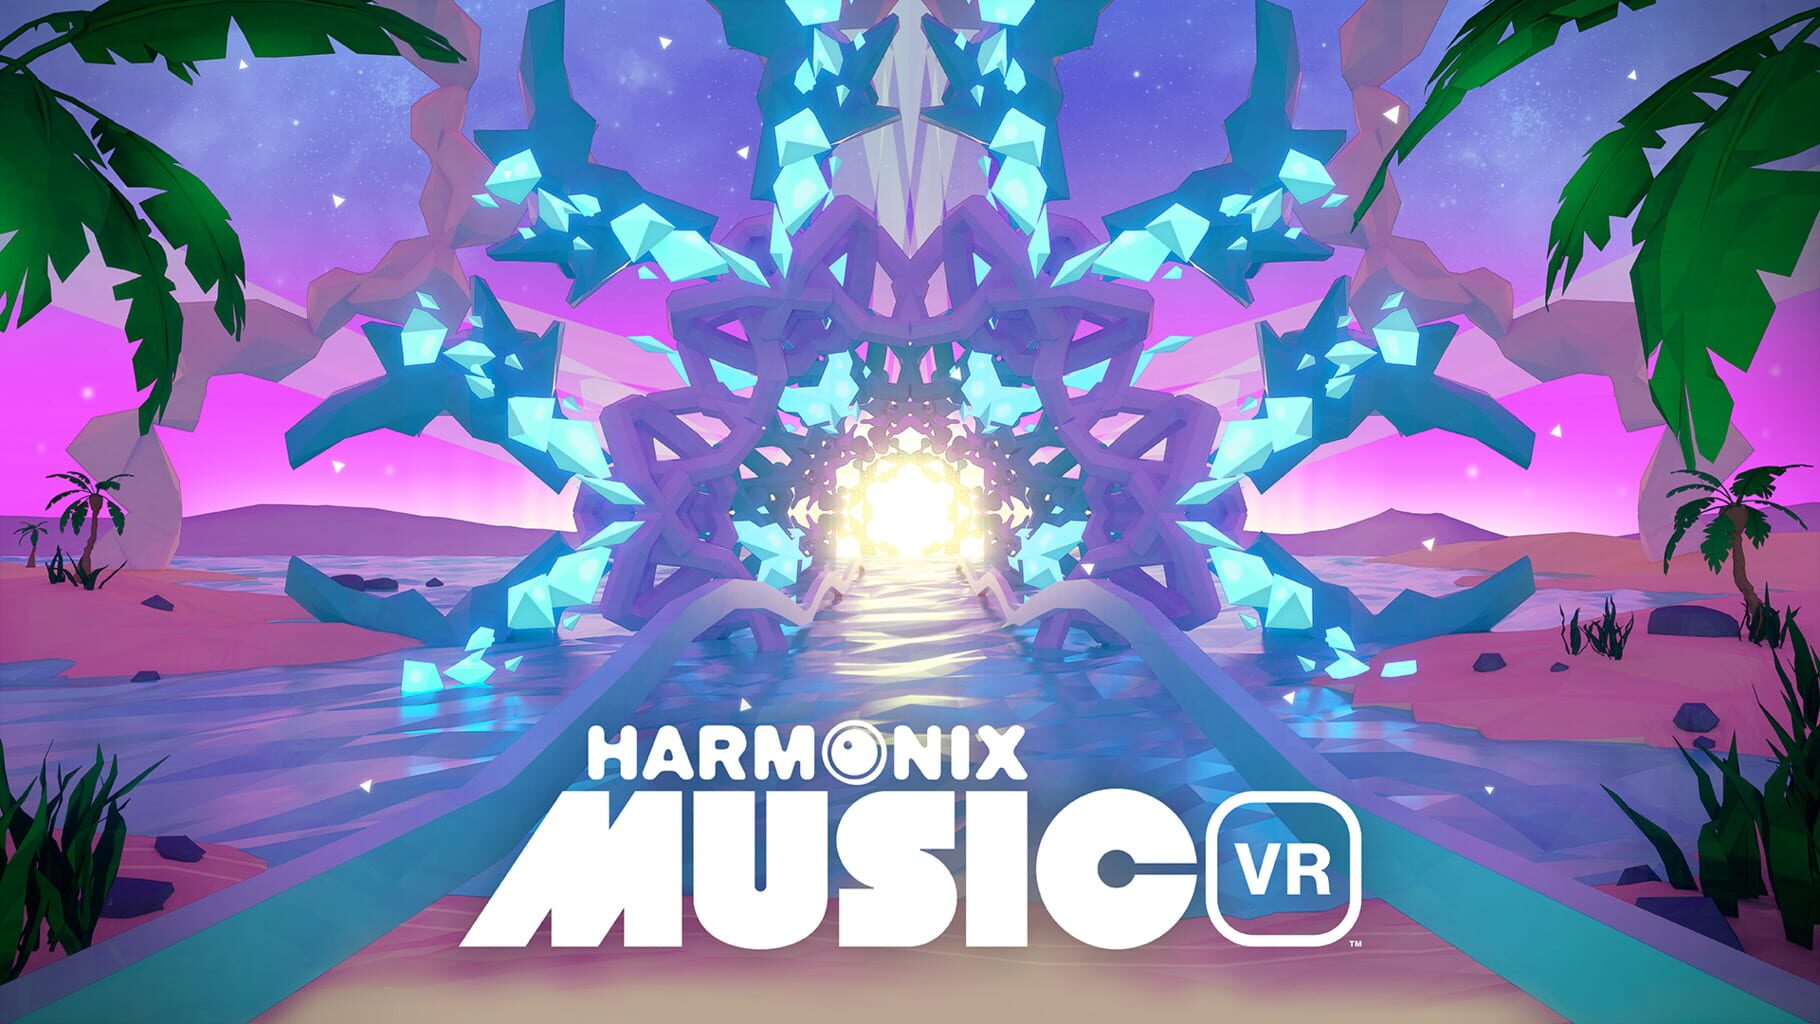 Arte - Harmonix Music VR